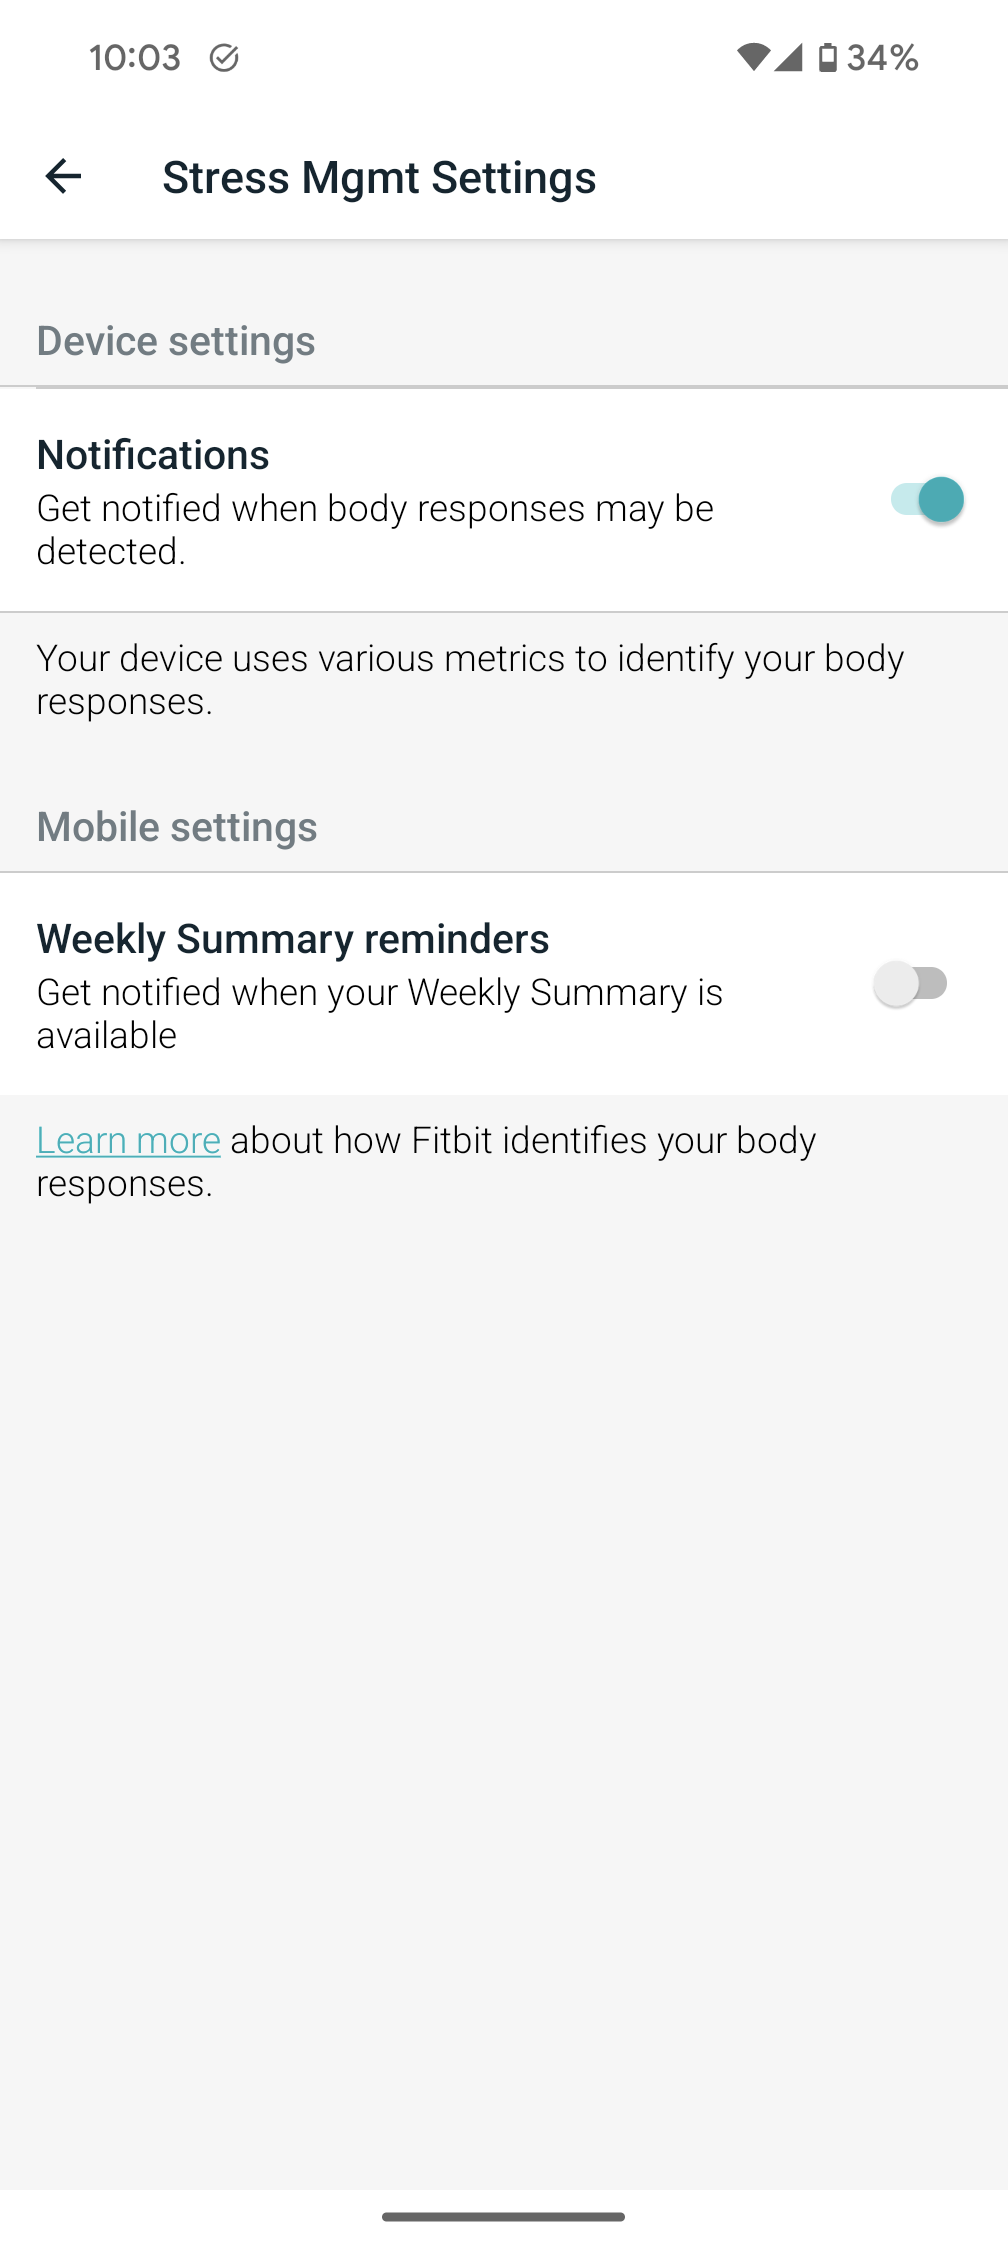 fitbit app screenshot settings activity stress management